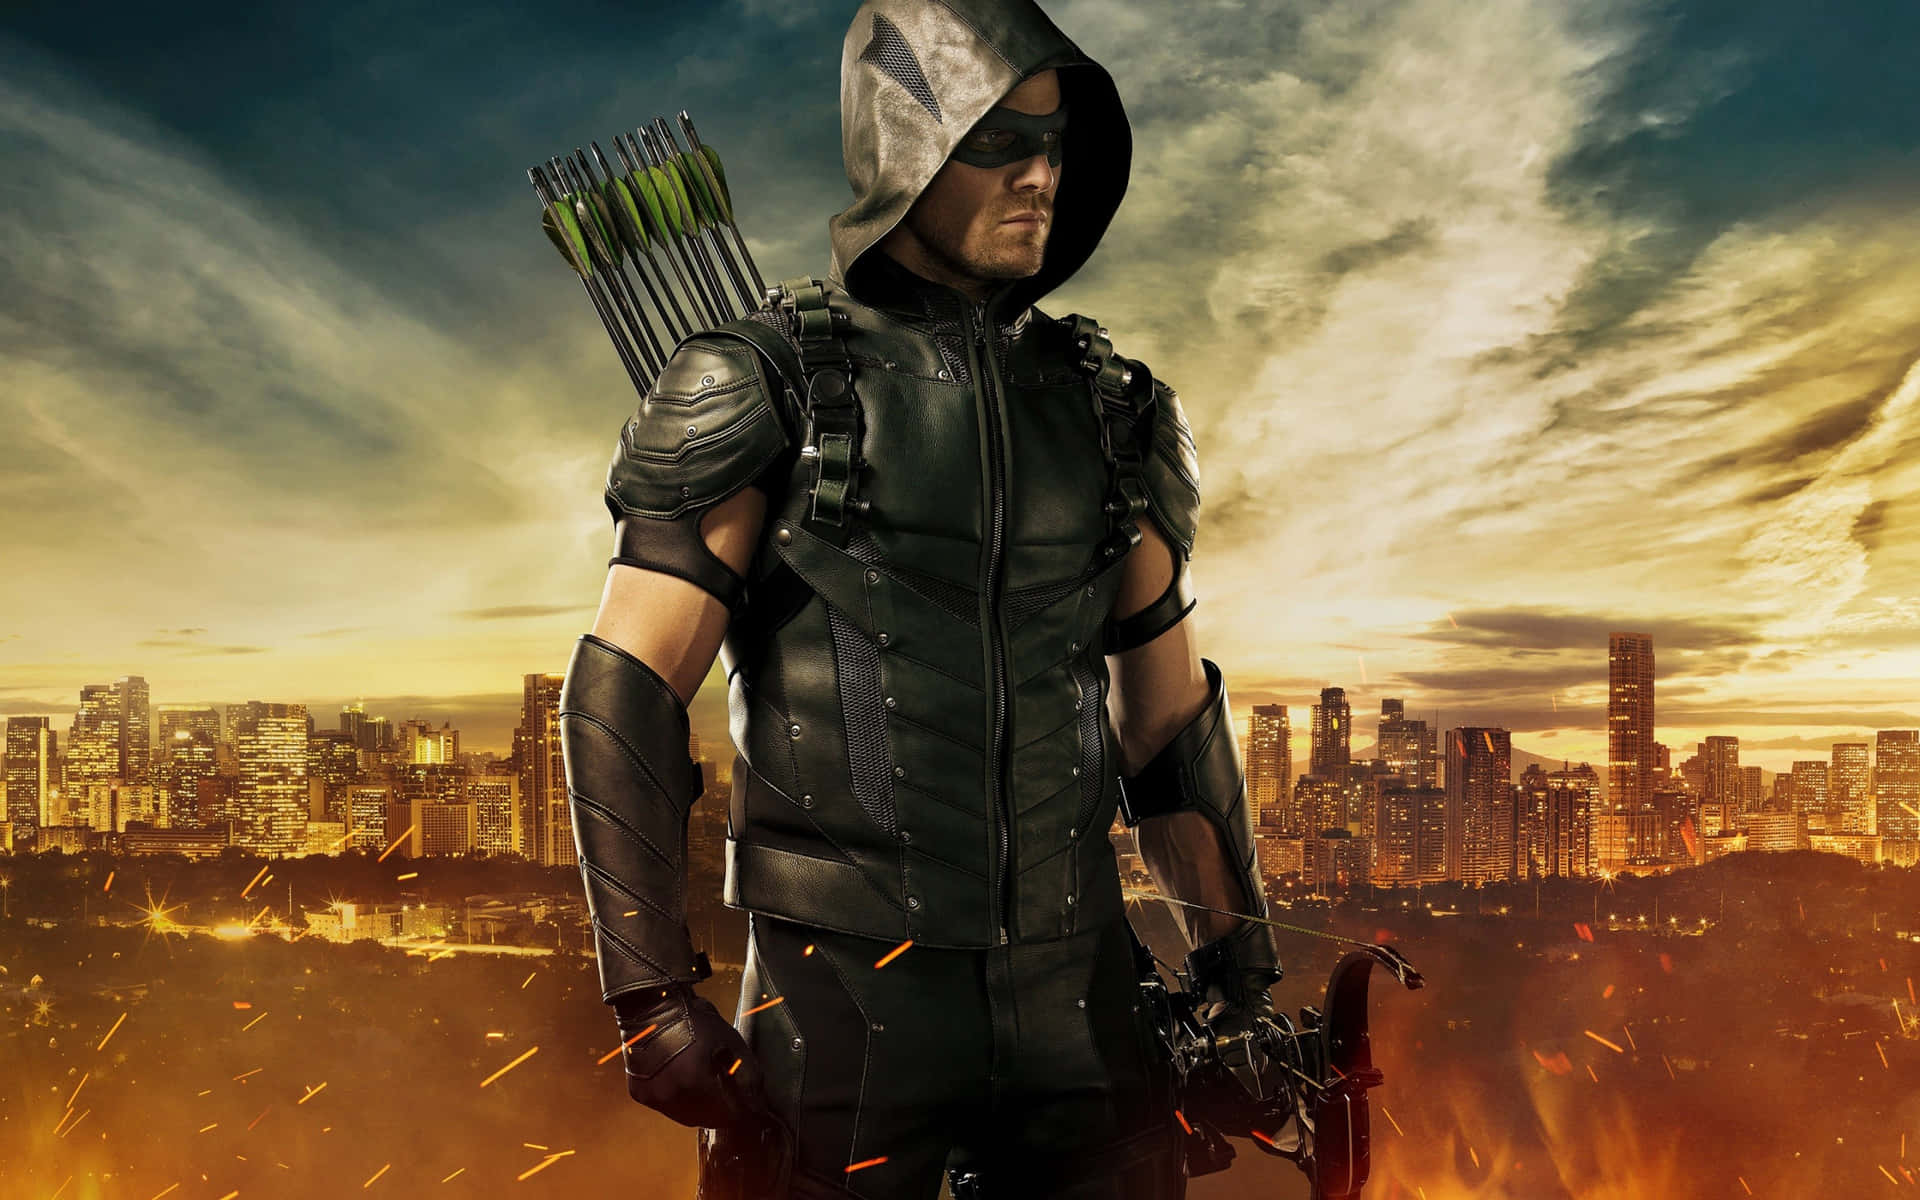 The popular superhero Green Arrow protect no matter the cost